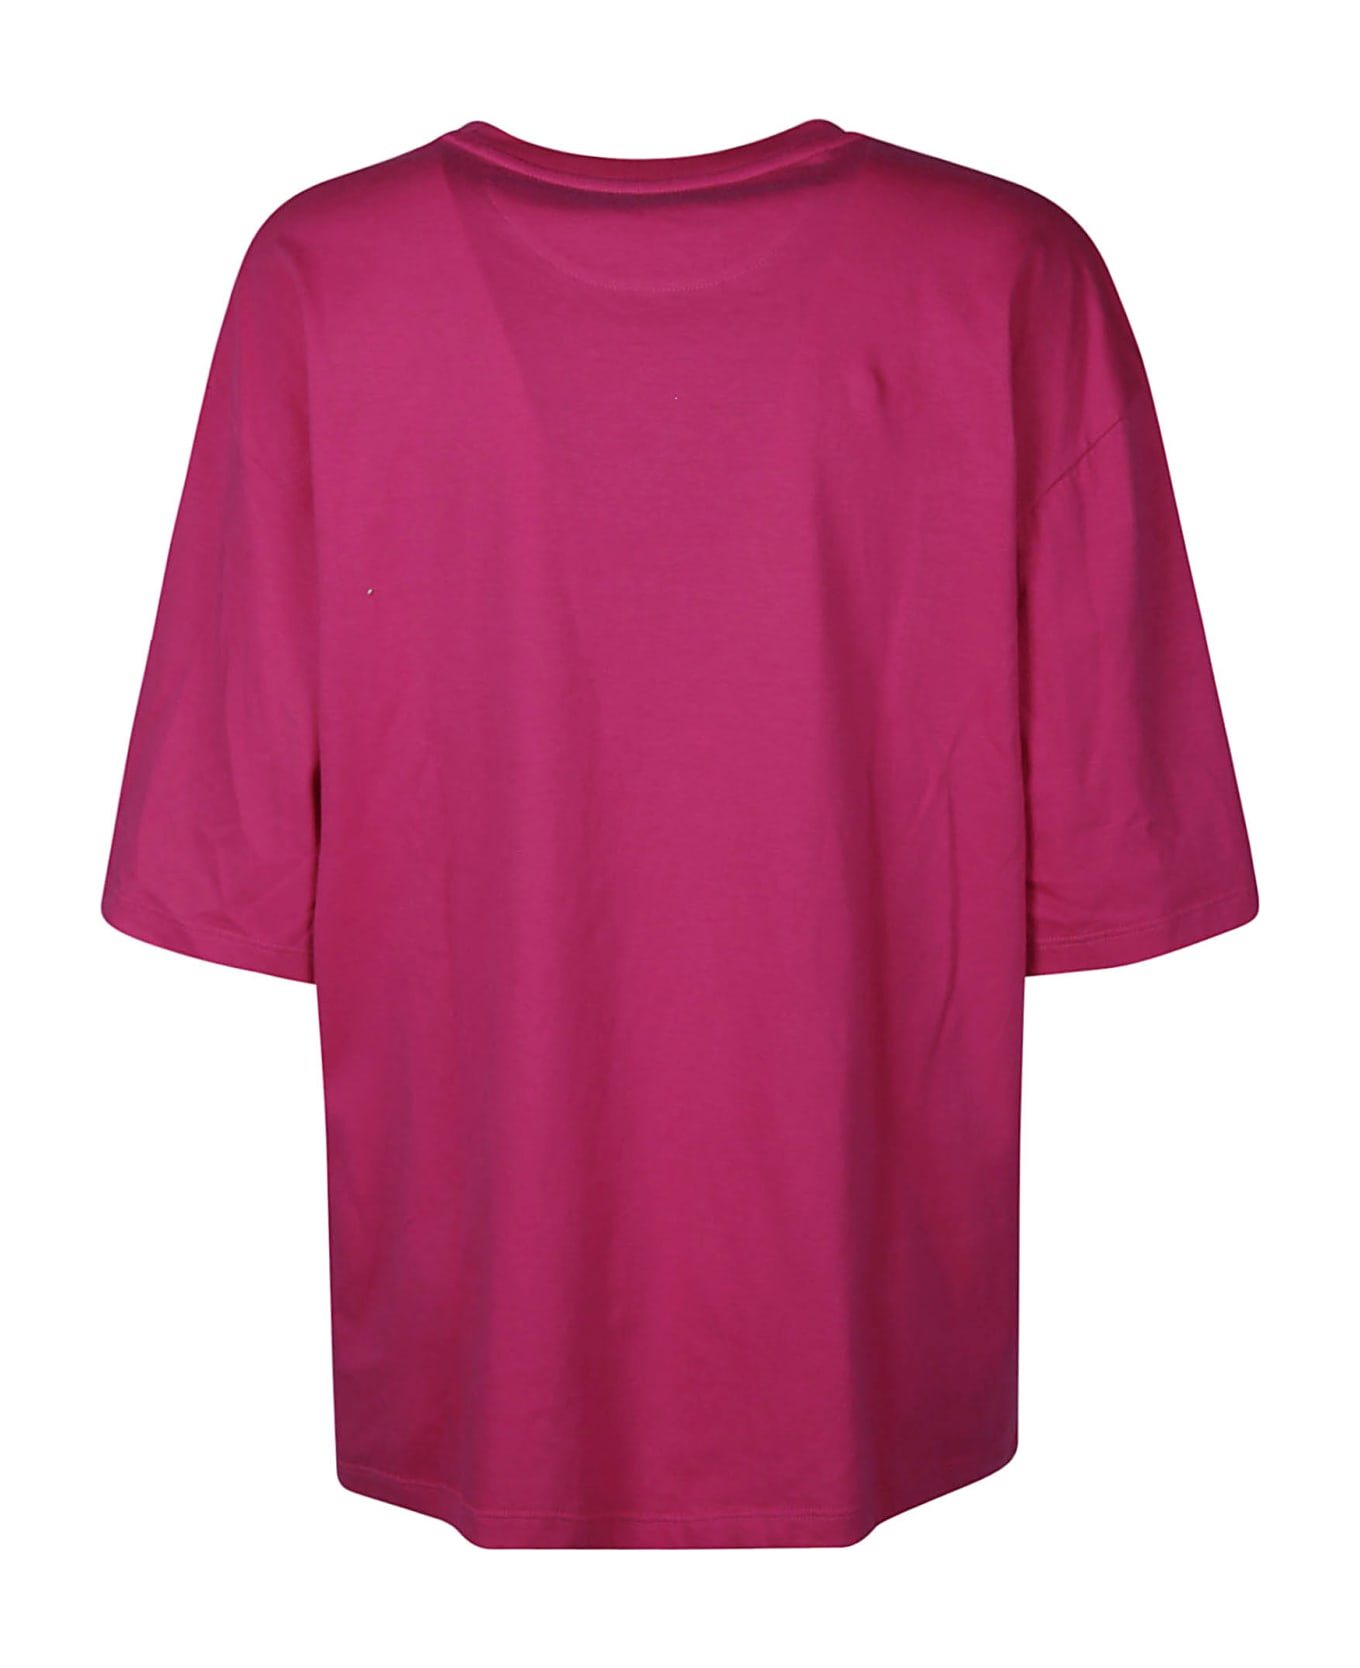 Valentino Floral Applique T-shirt - Fuchsia